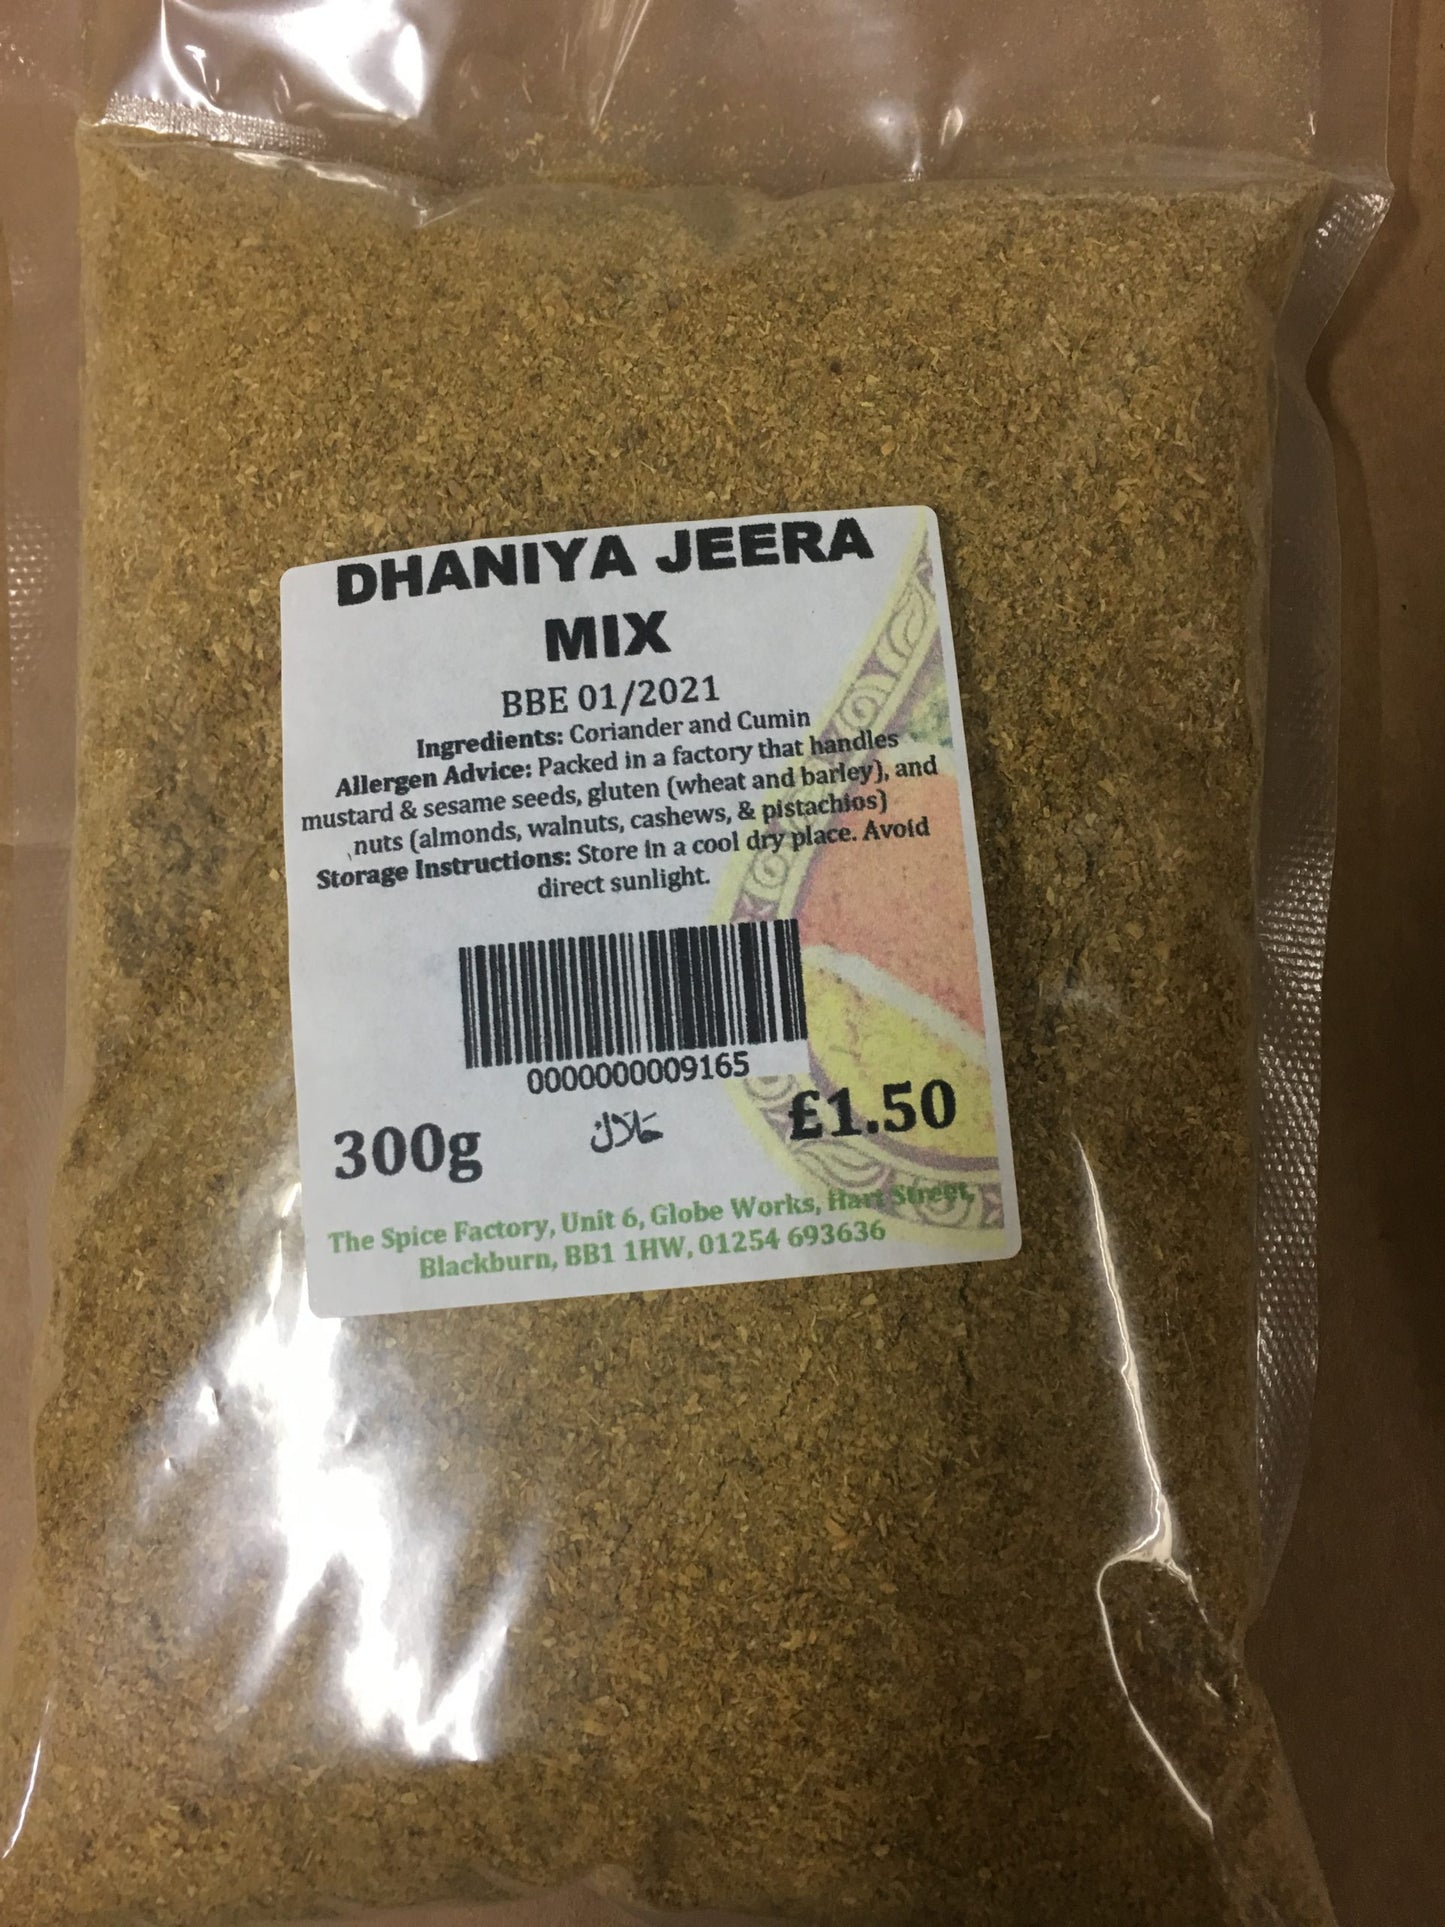 Spice Factory Dhaniya Jeera Mix